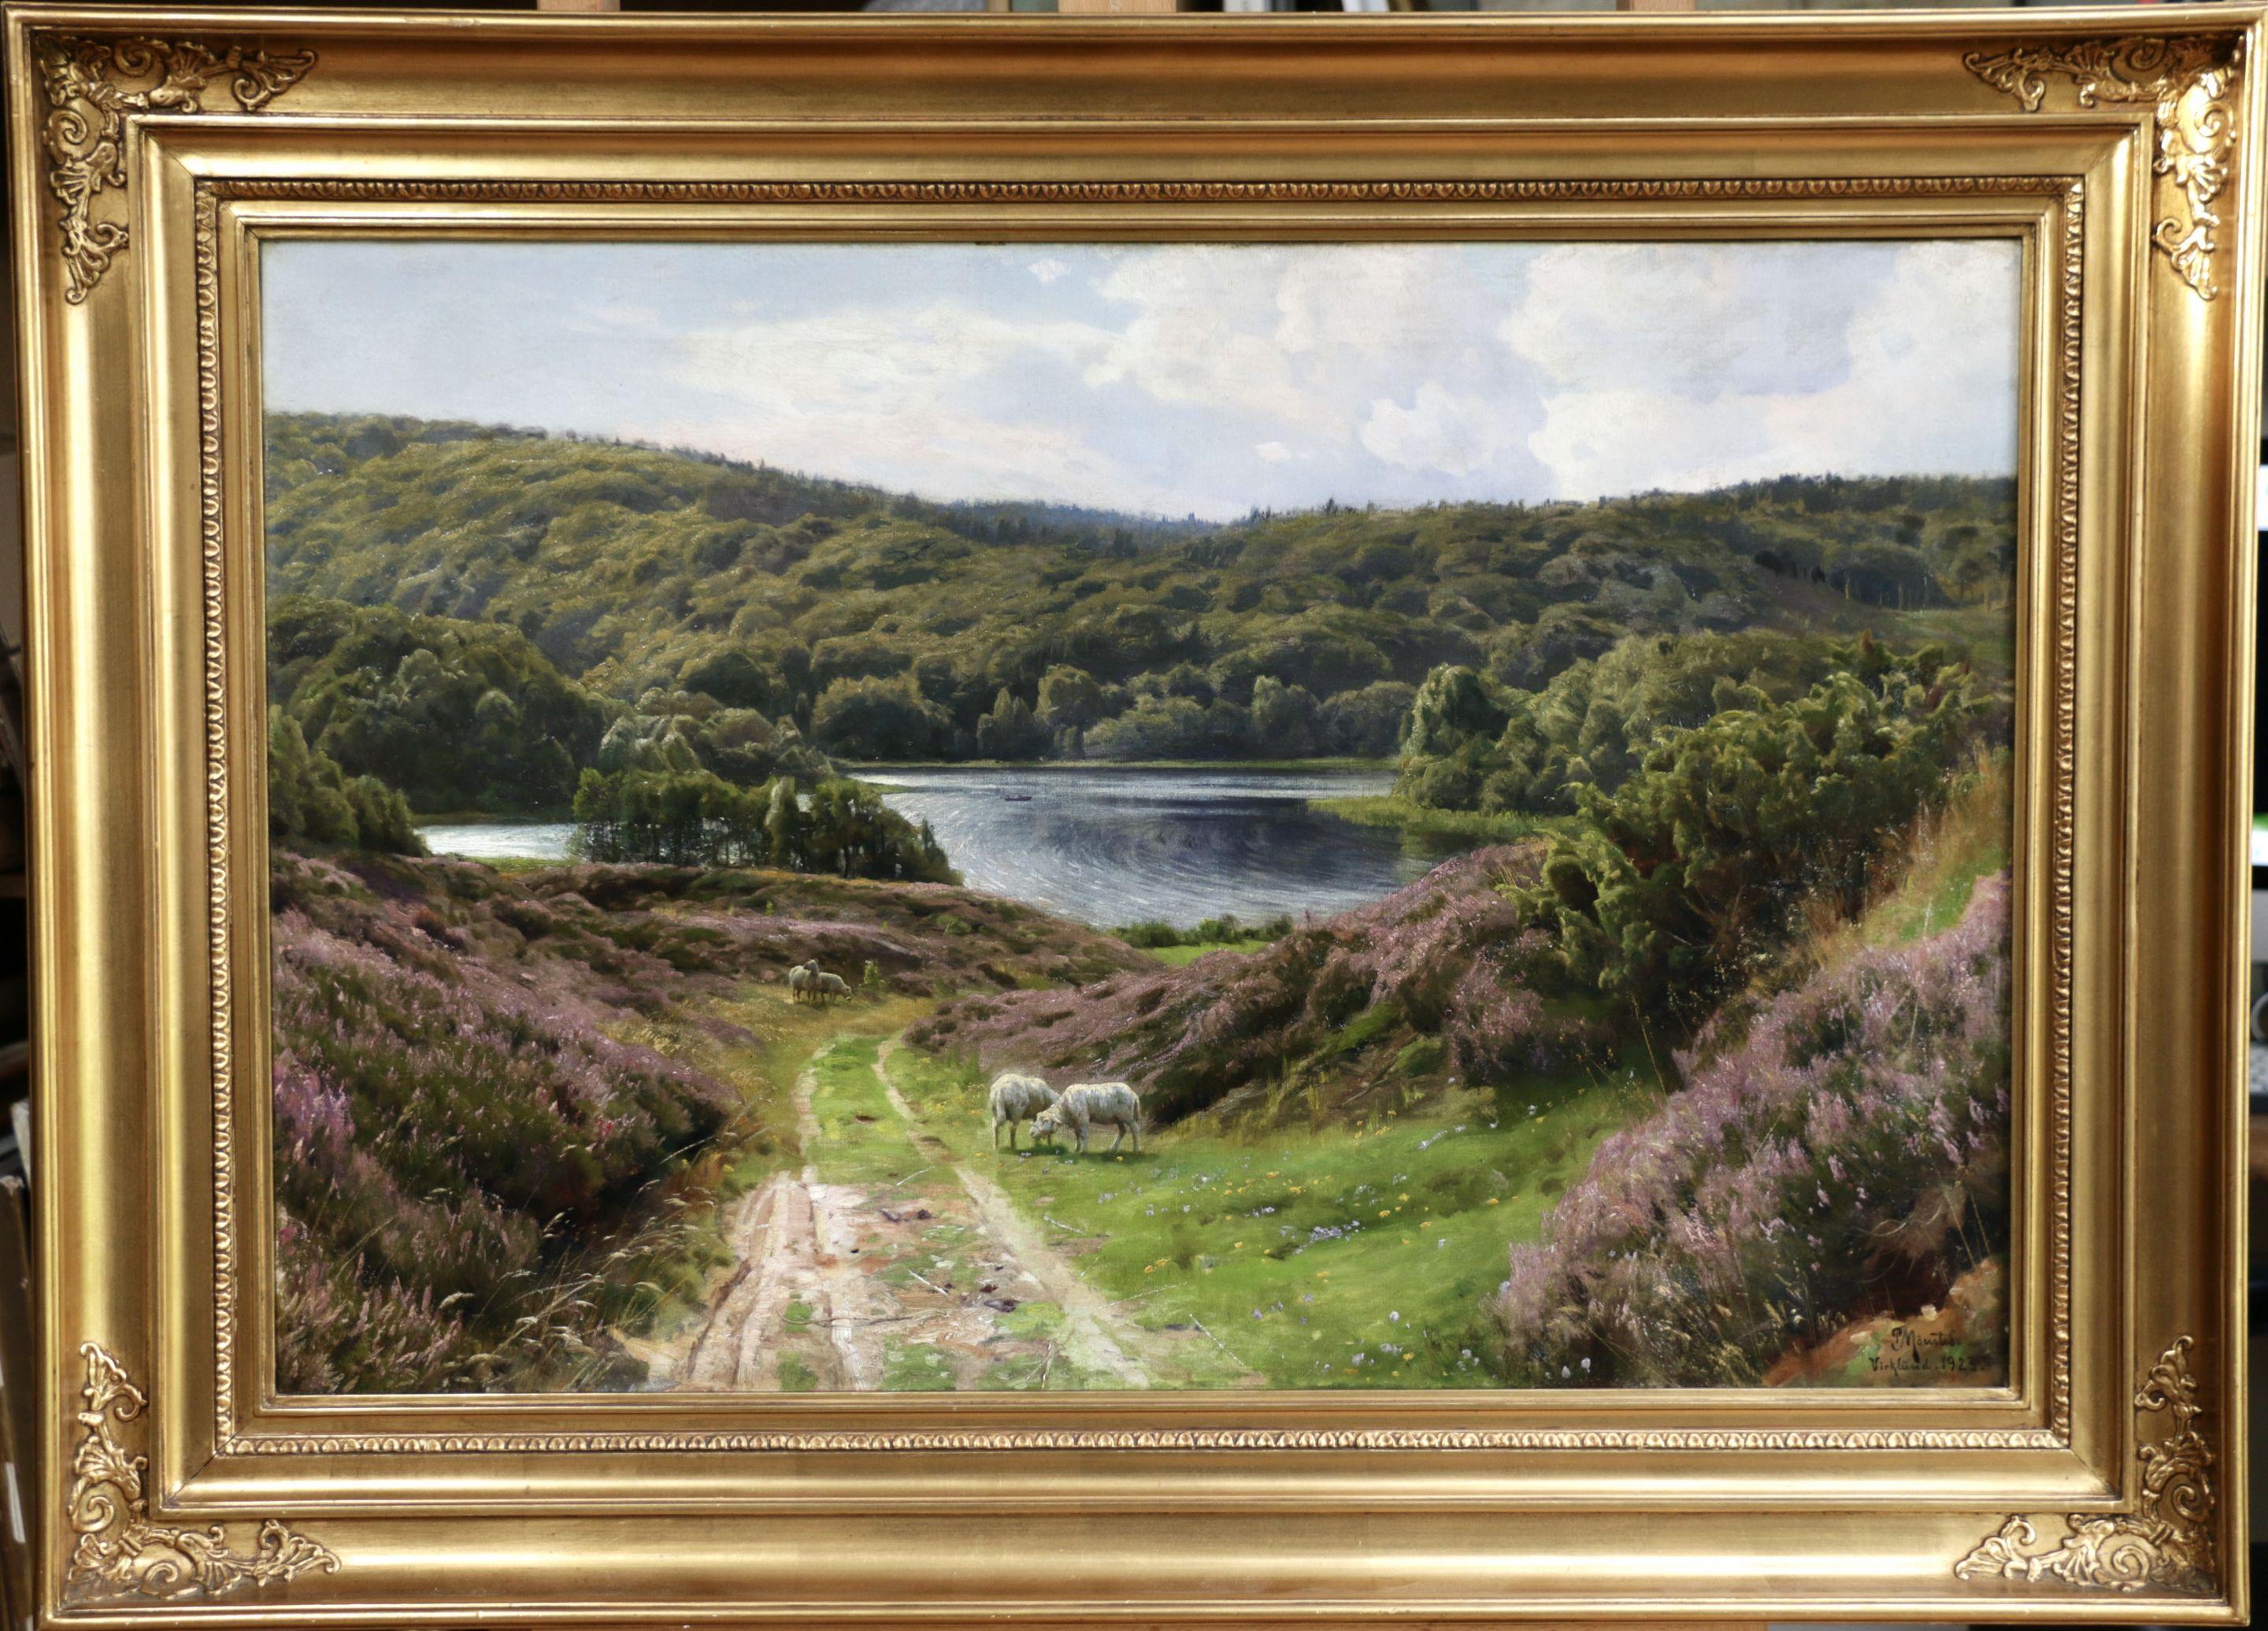 Virklund - East Jutland - 19th Century Oil, Sheep & Lake in Landscape by Monsted - Painting by Peder Mørk Mønsted